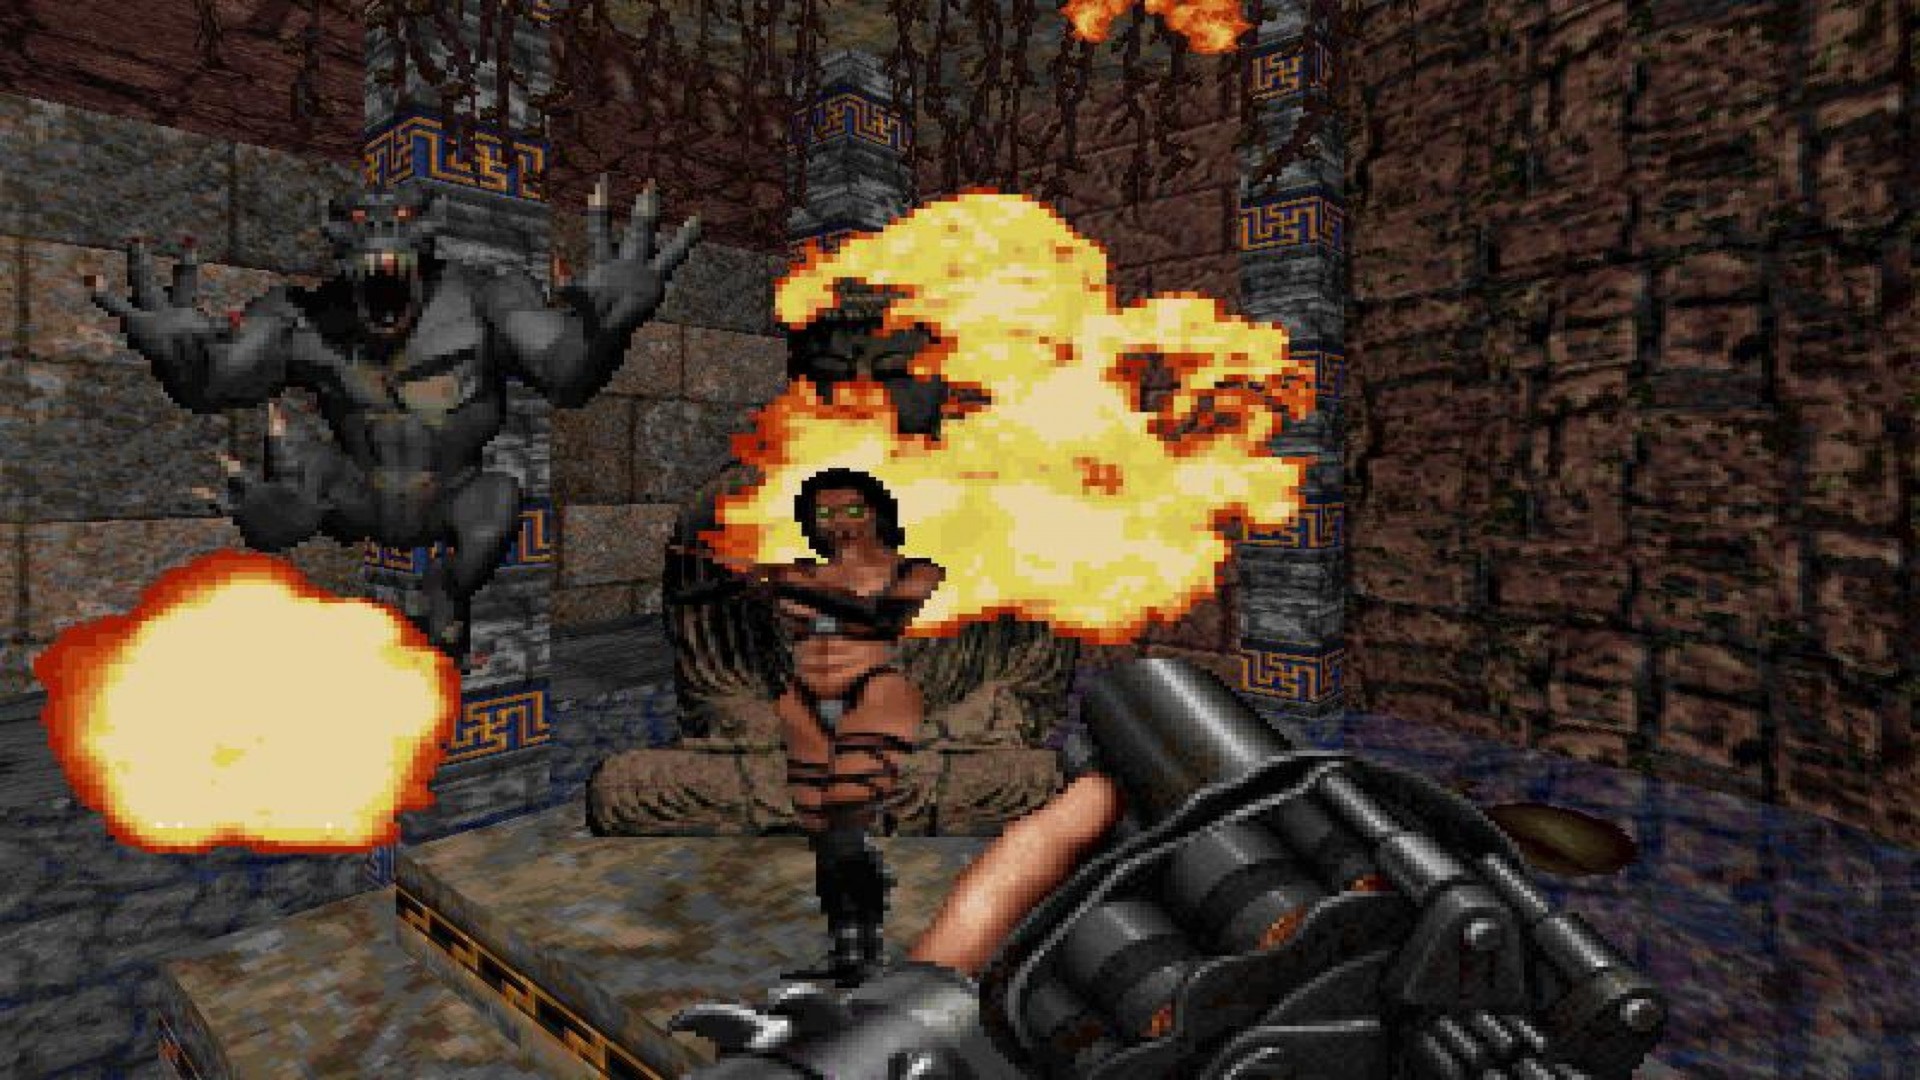 Shadow Warrior Classic (1997) on Steam